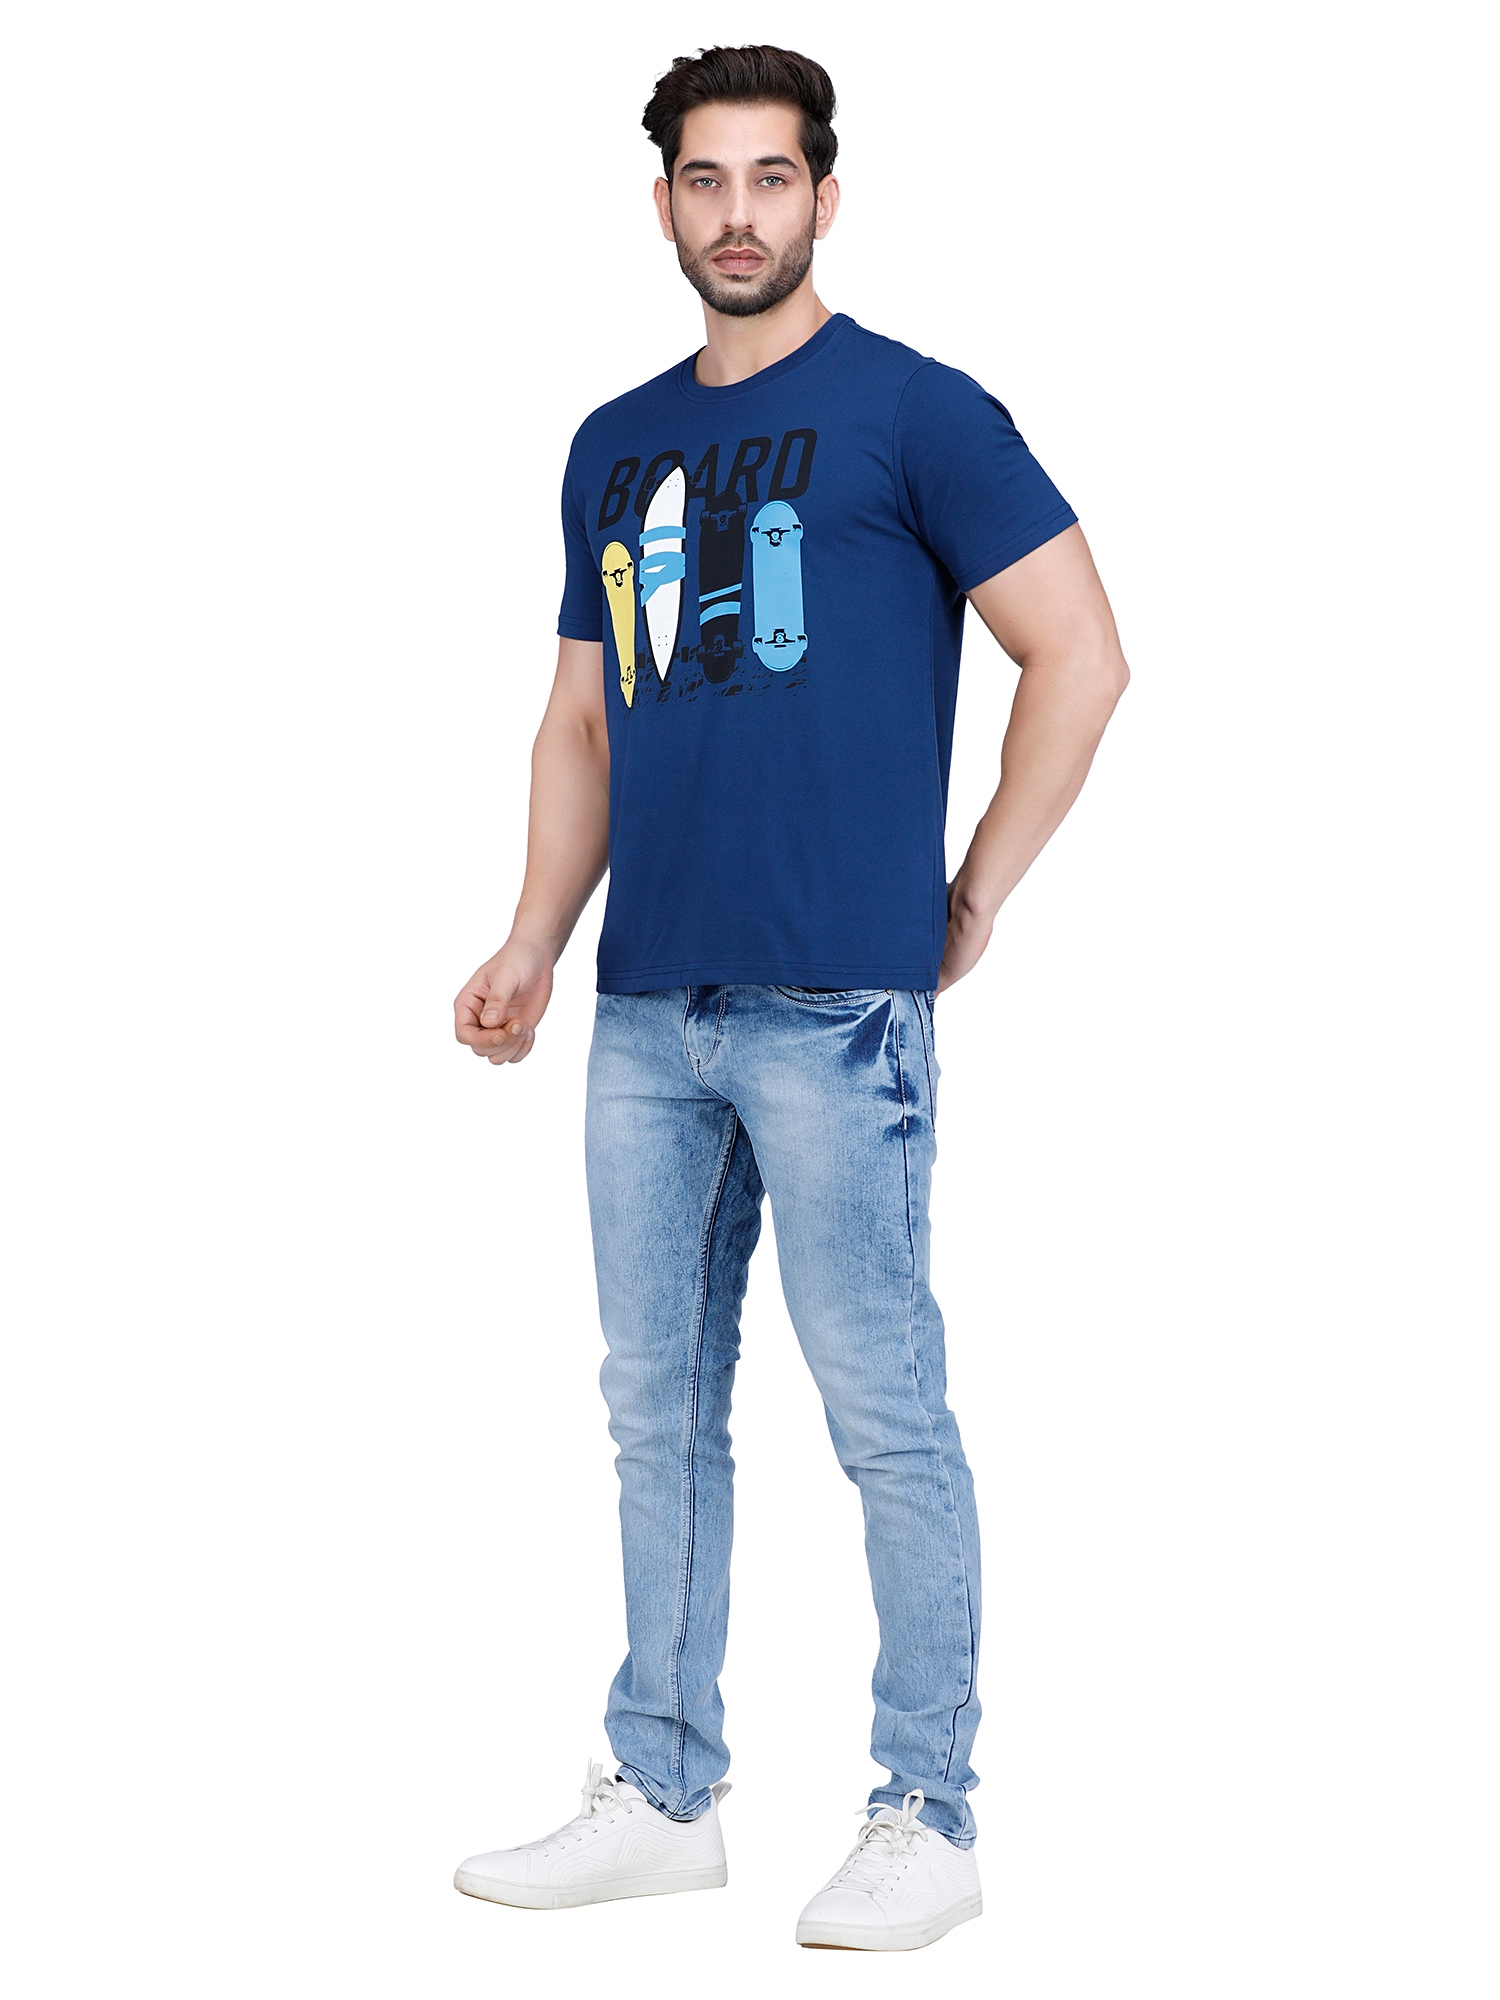 D'cot by Donear Men Blue Polycotton Regular Graphics T-Shirts